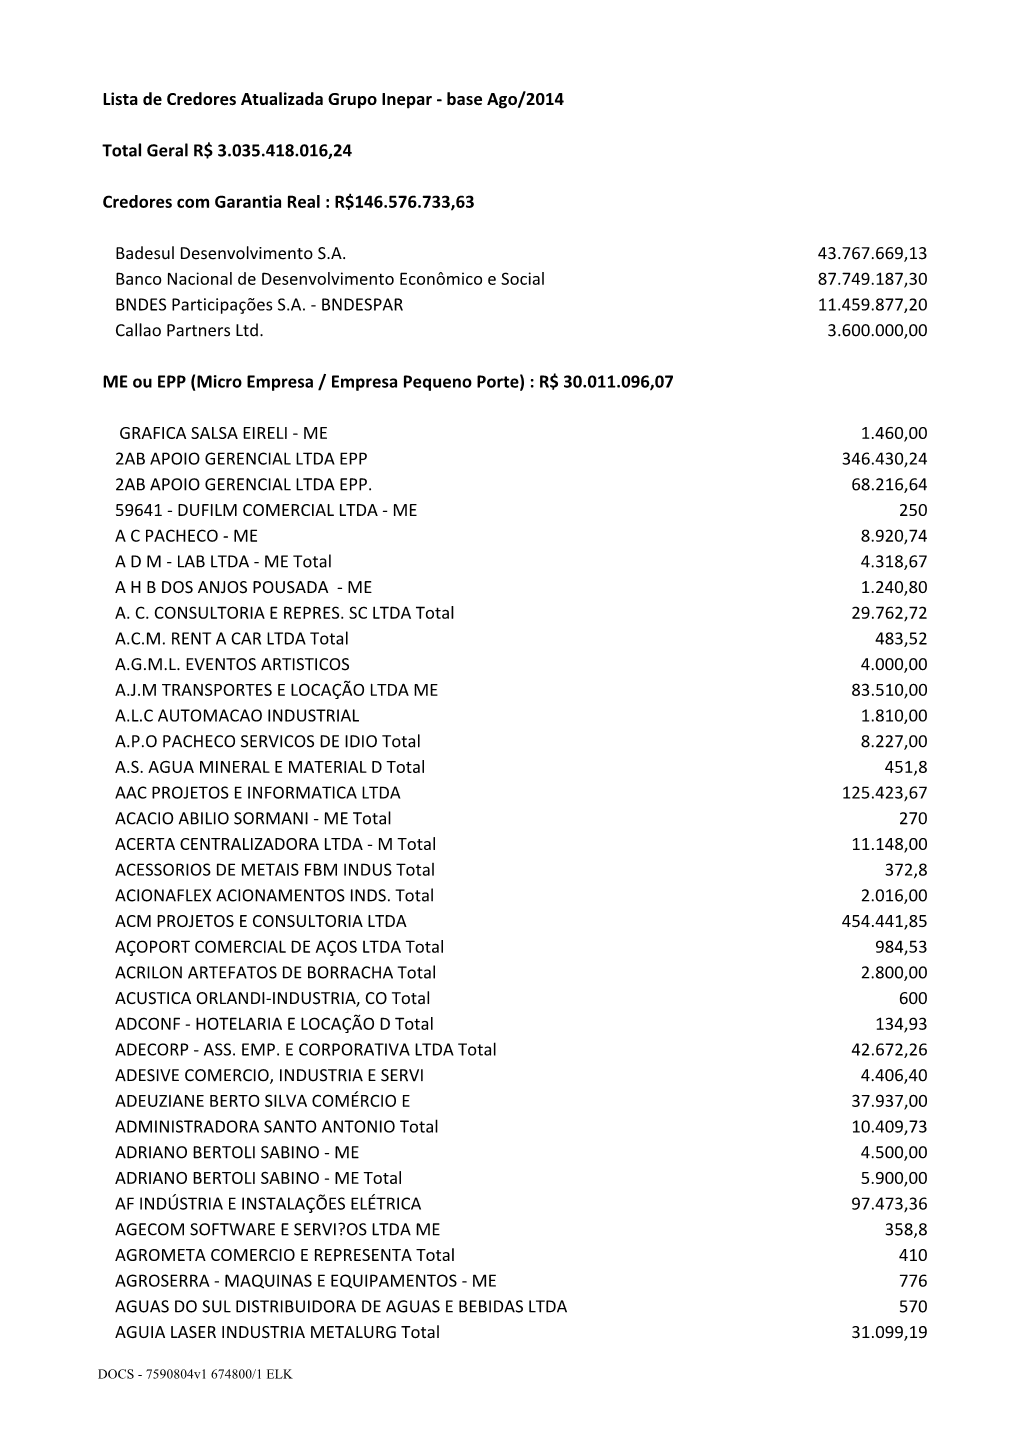 Lista De Credores Atualizada Grupo Inepar ‐ Base Ago/2014